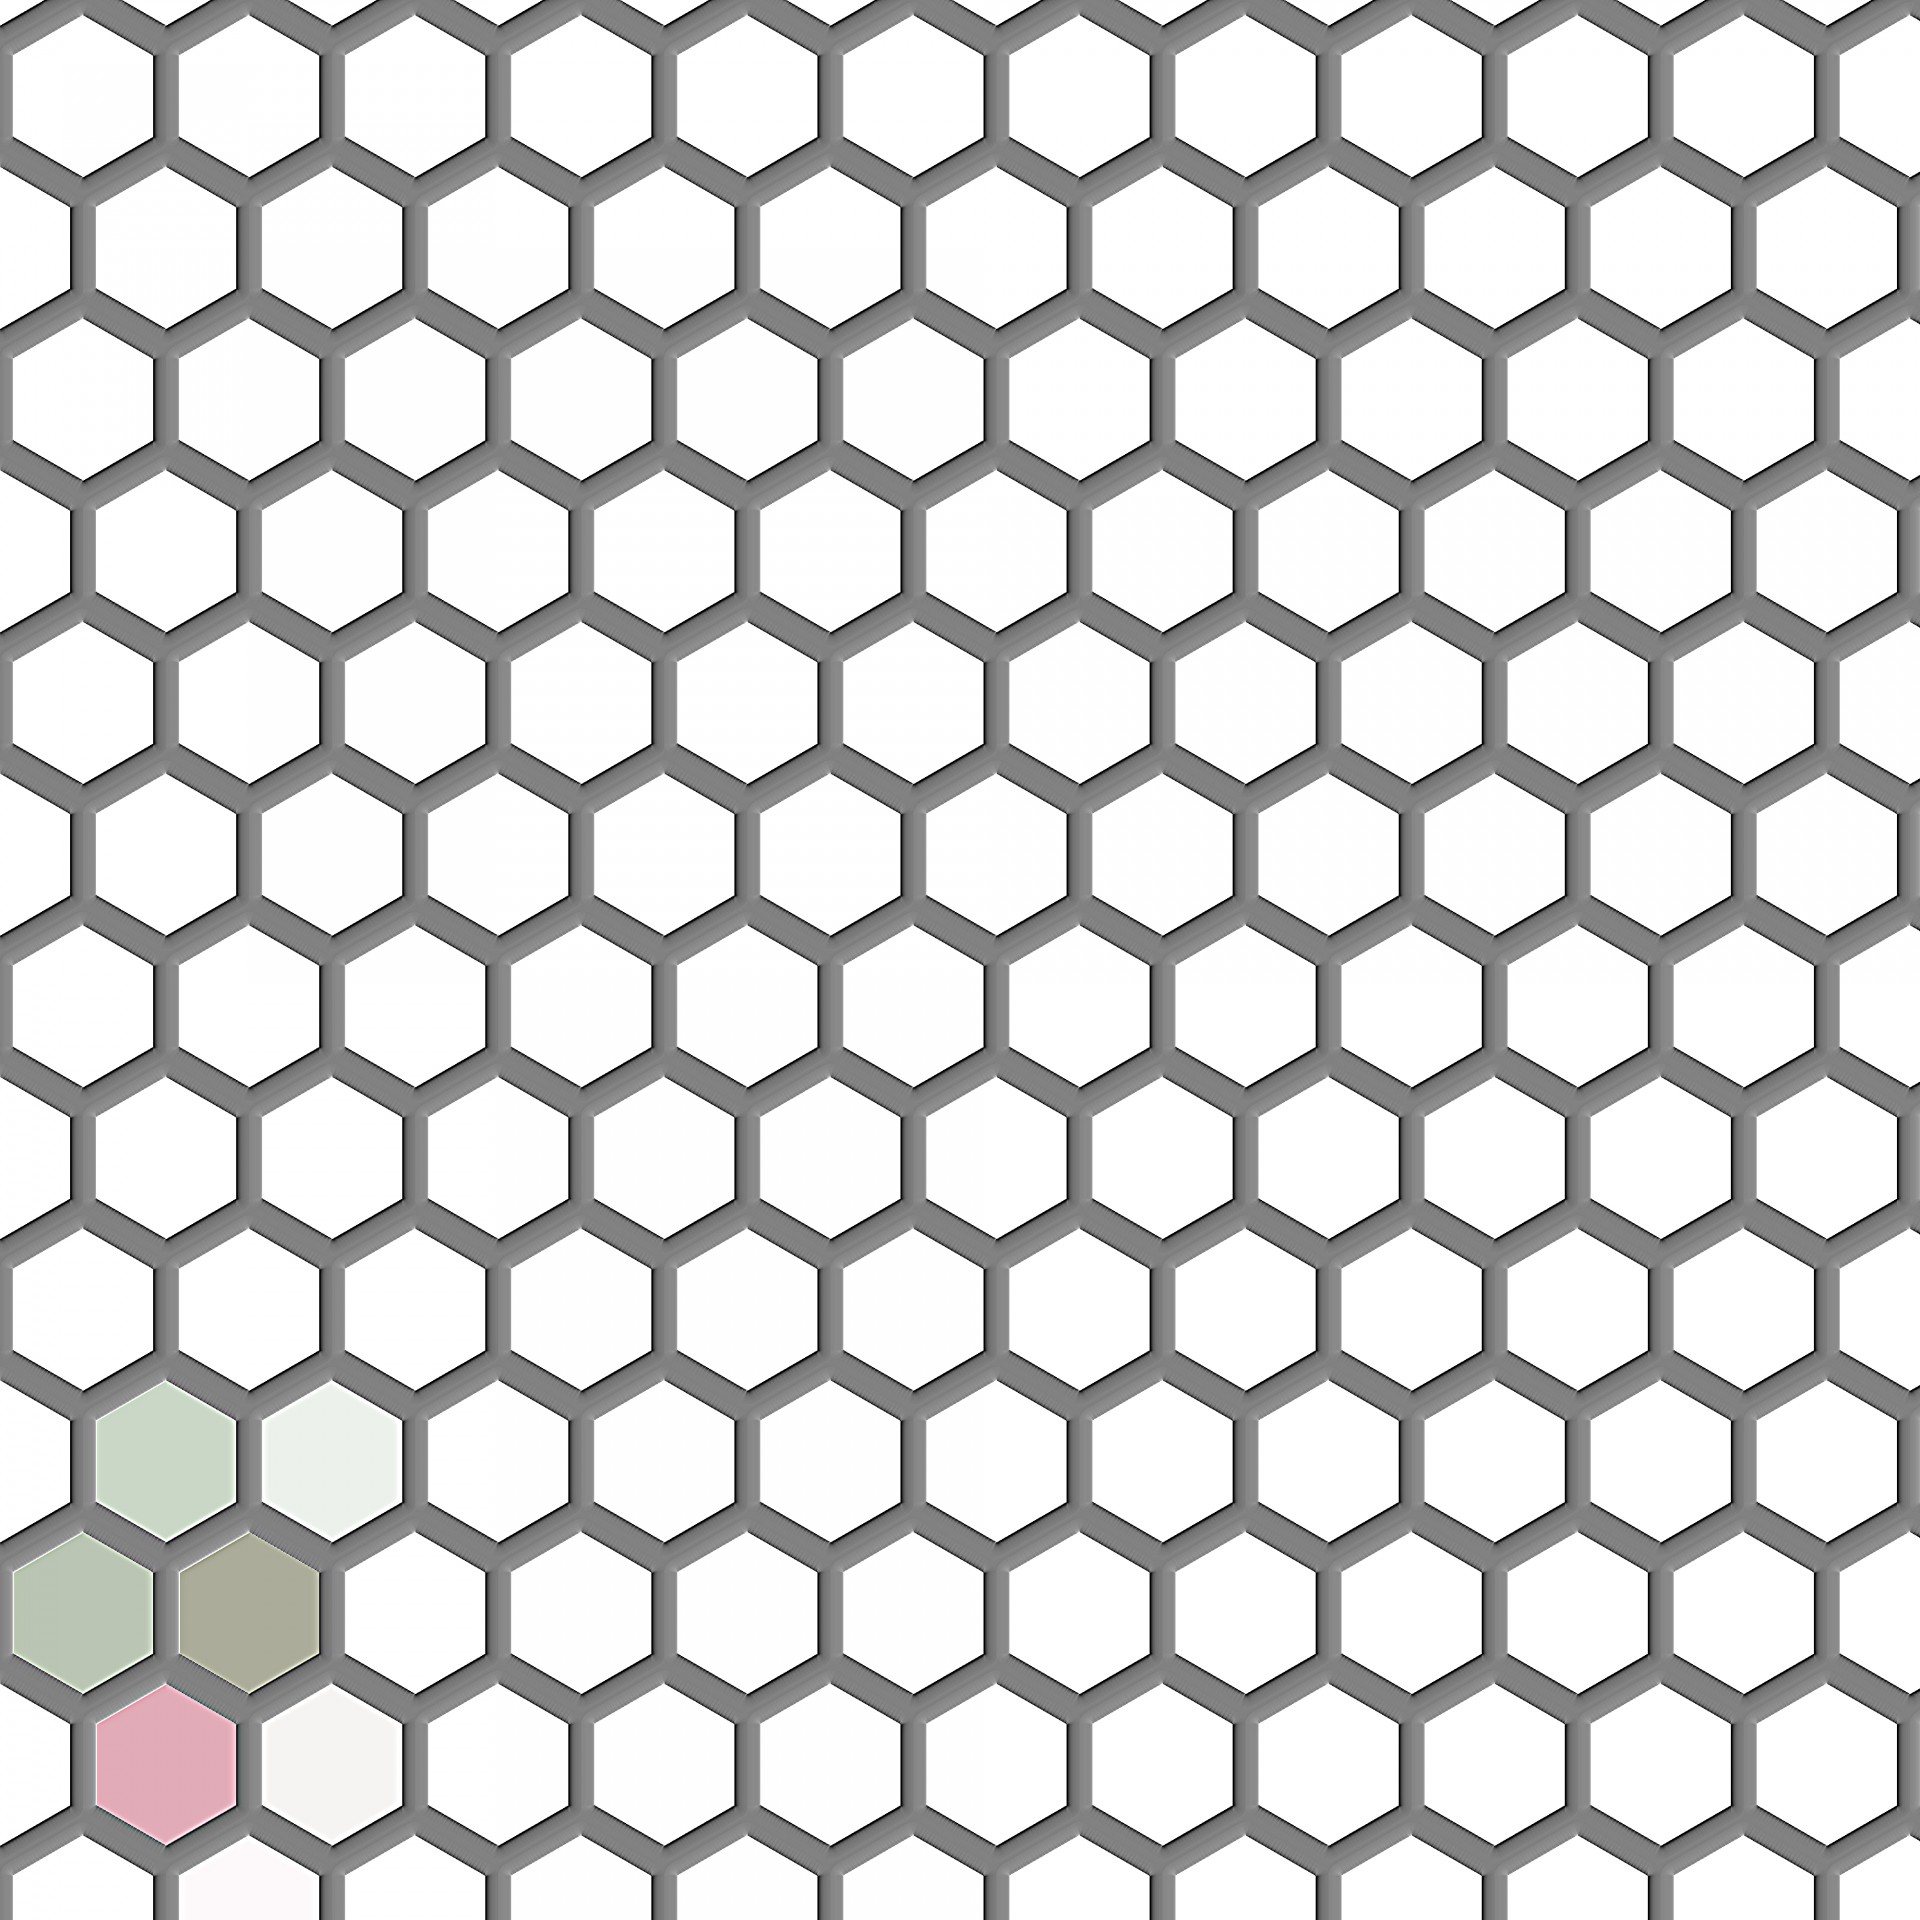 Пандора решетка шестиугольники